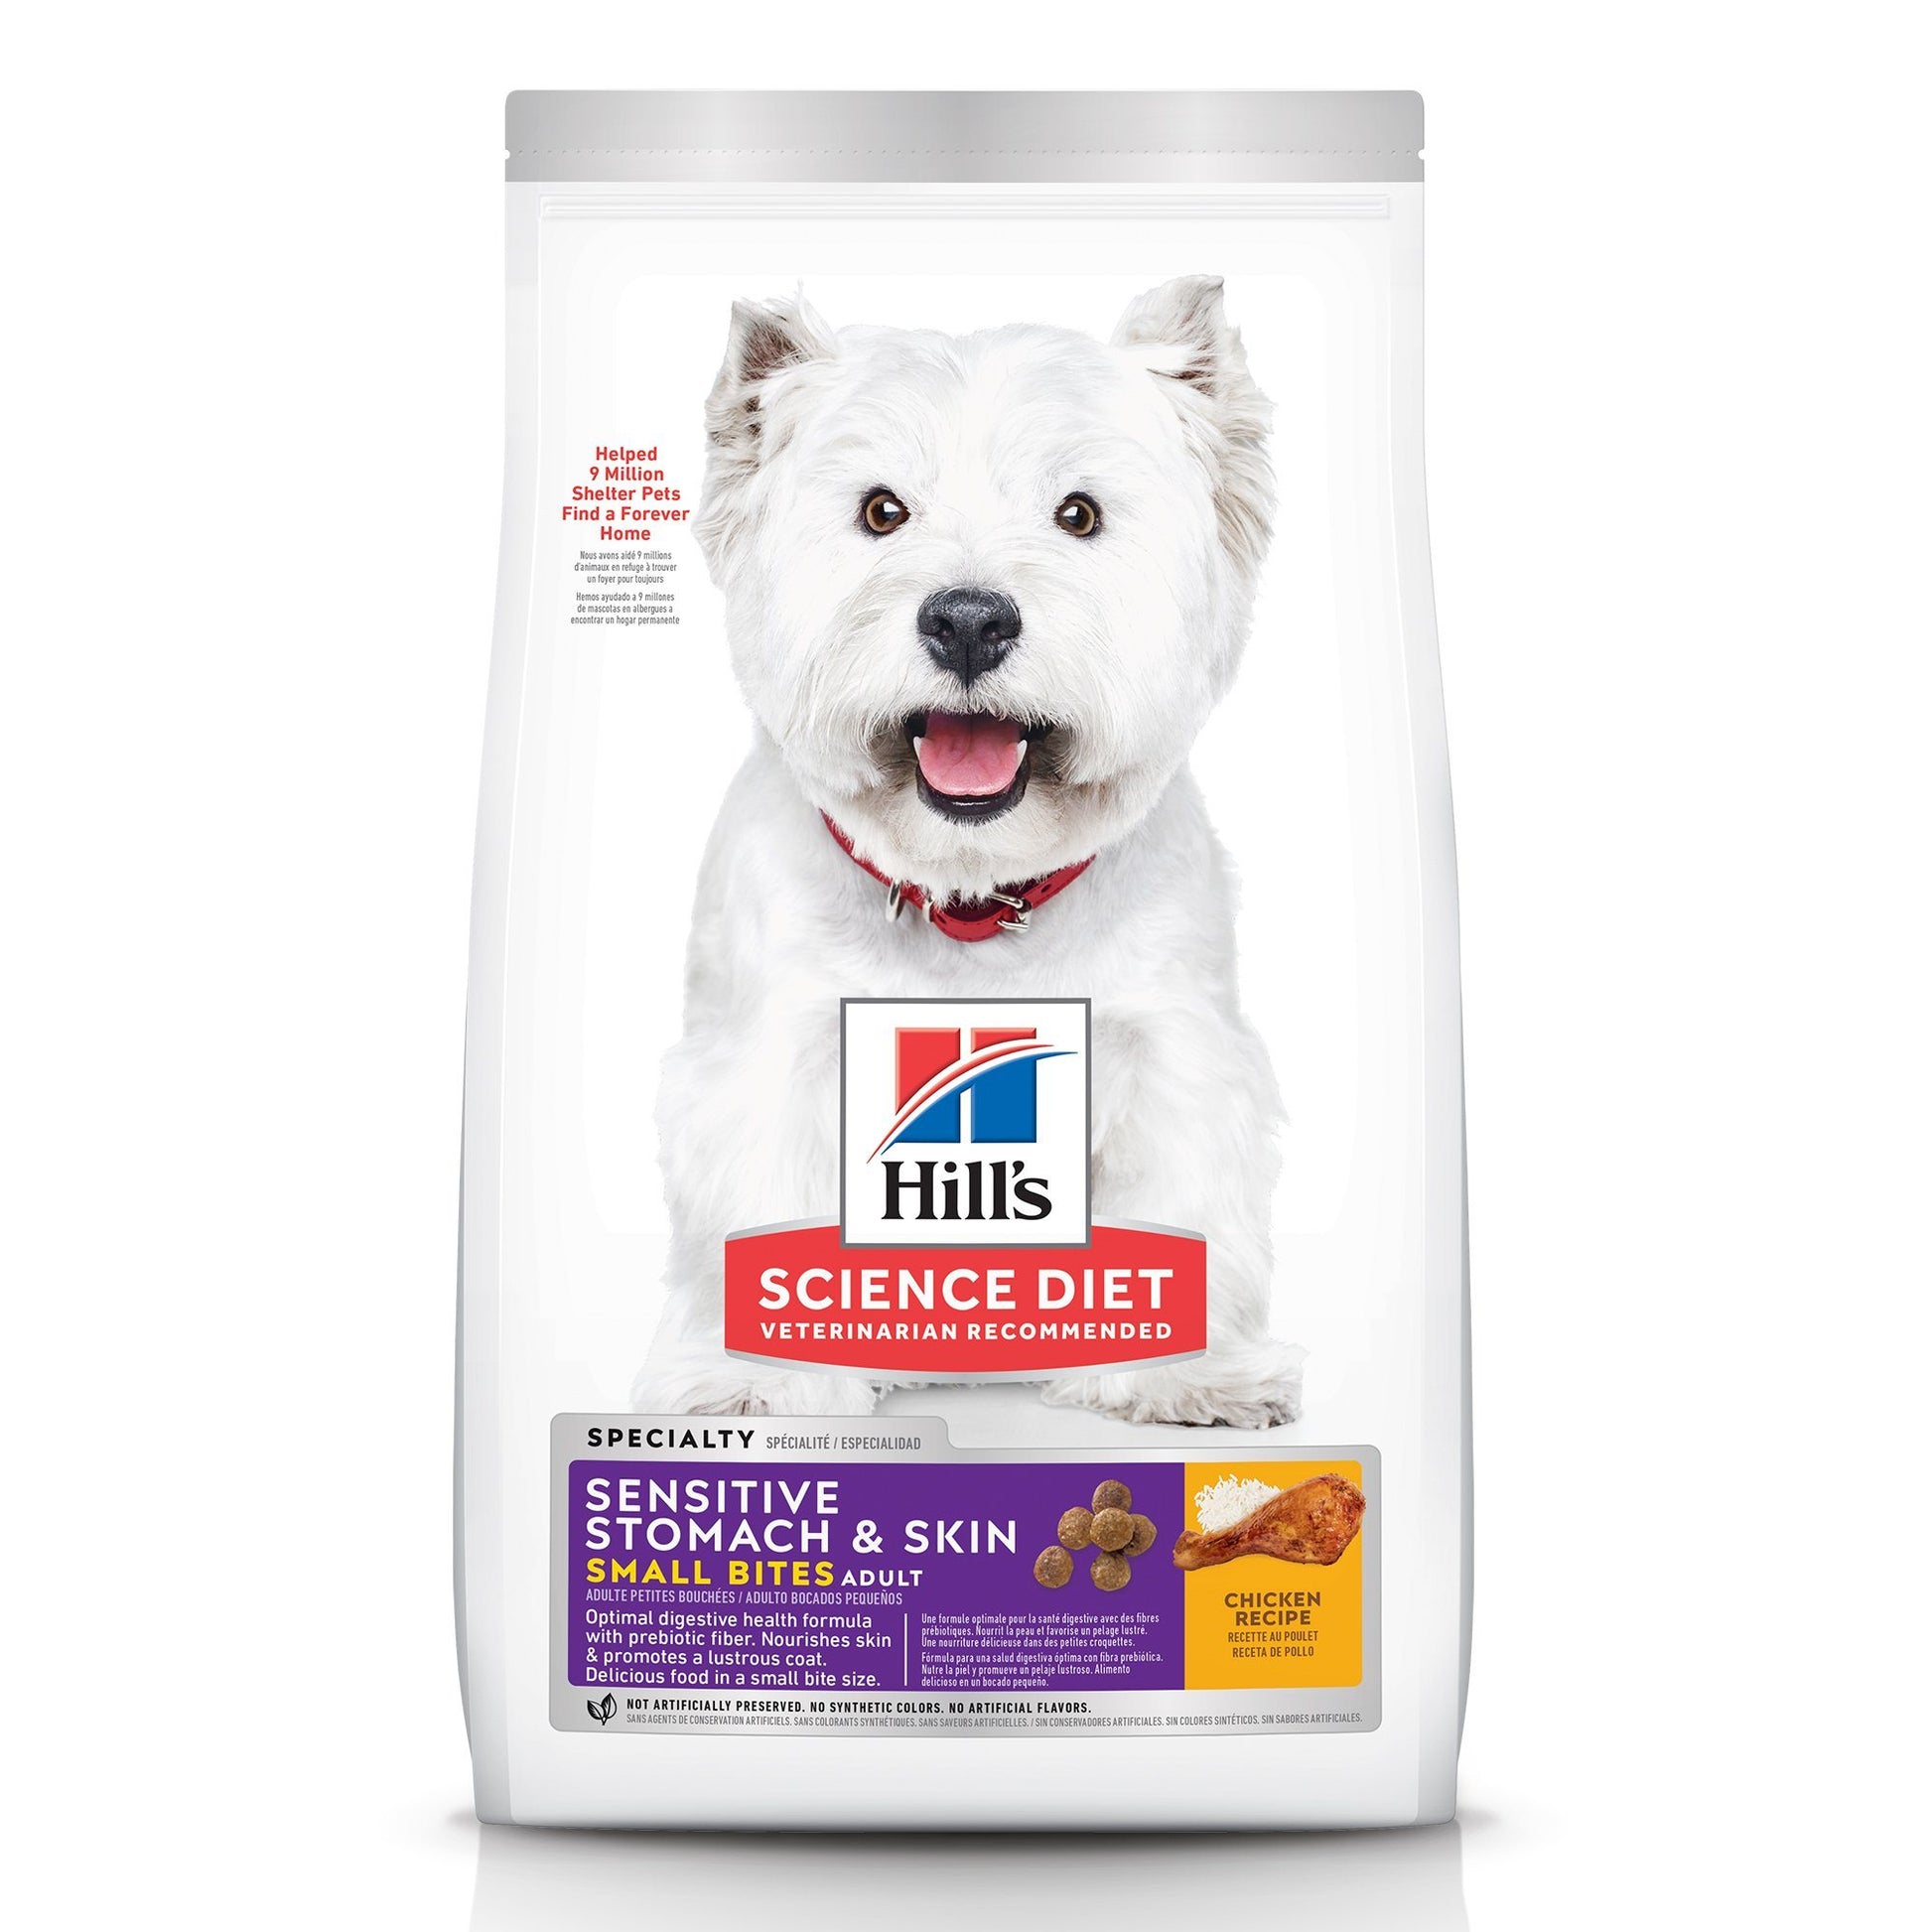 Hill's Science Diet Adult Sensitive Stomach & Skin Small Bites Dry Dog Food, Chicken Recipe, 1.81 Kg Bag 2.04 Kg Dog Food 2.04 Kg | PetMax Canada